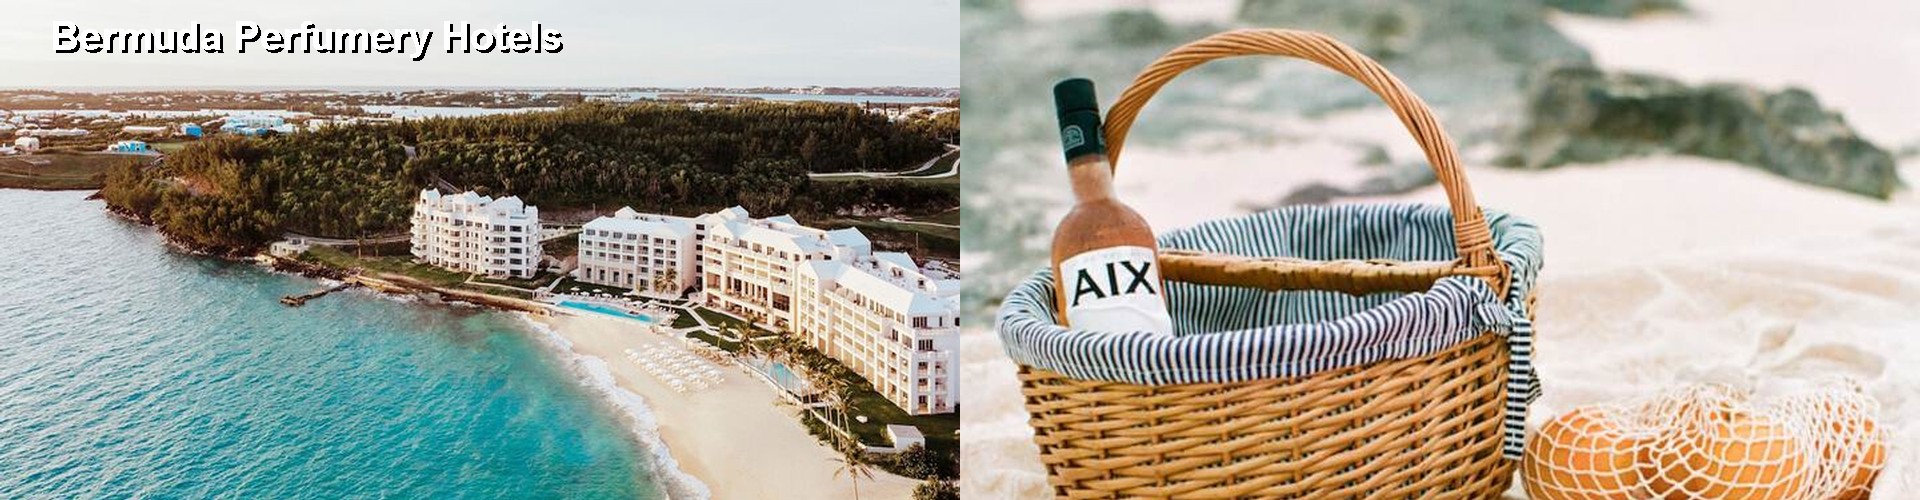 5 Best Hotels near Bermuda Perfumery